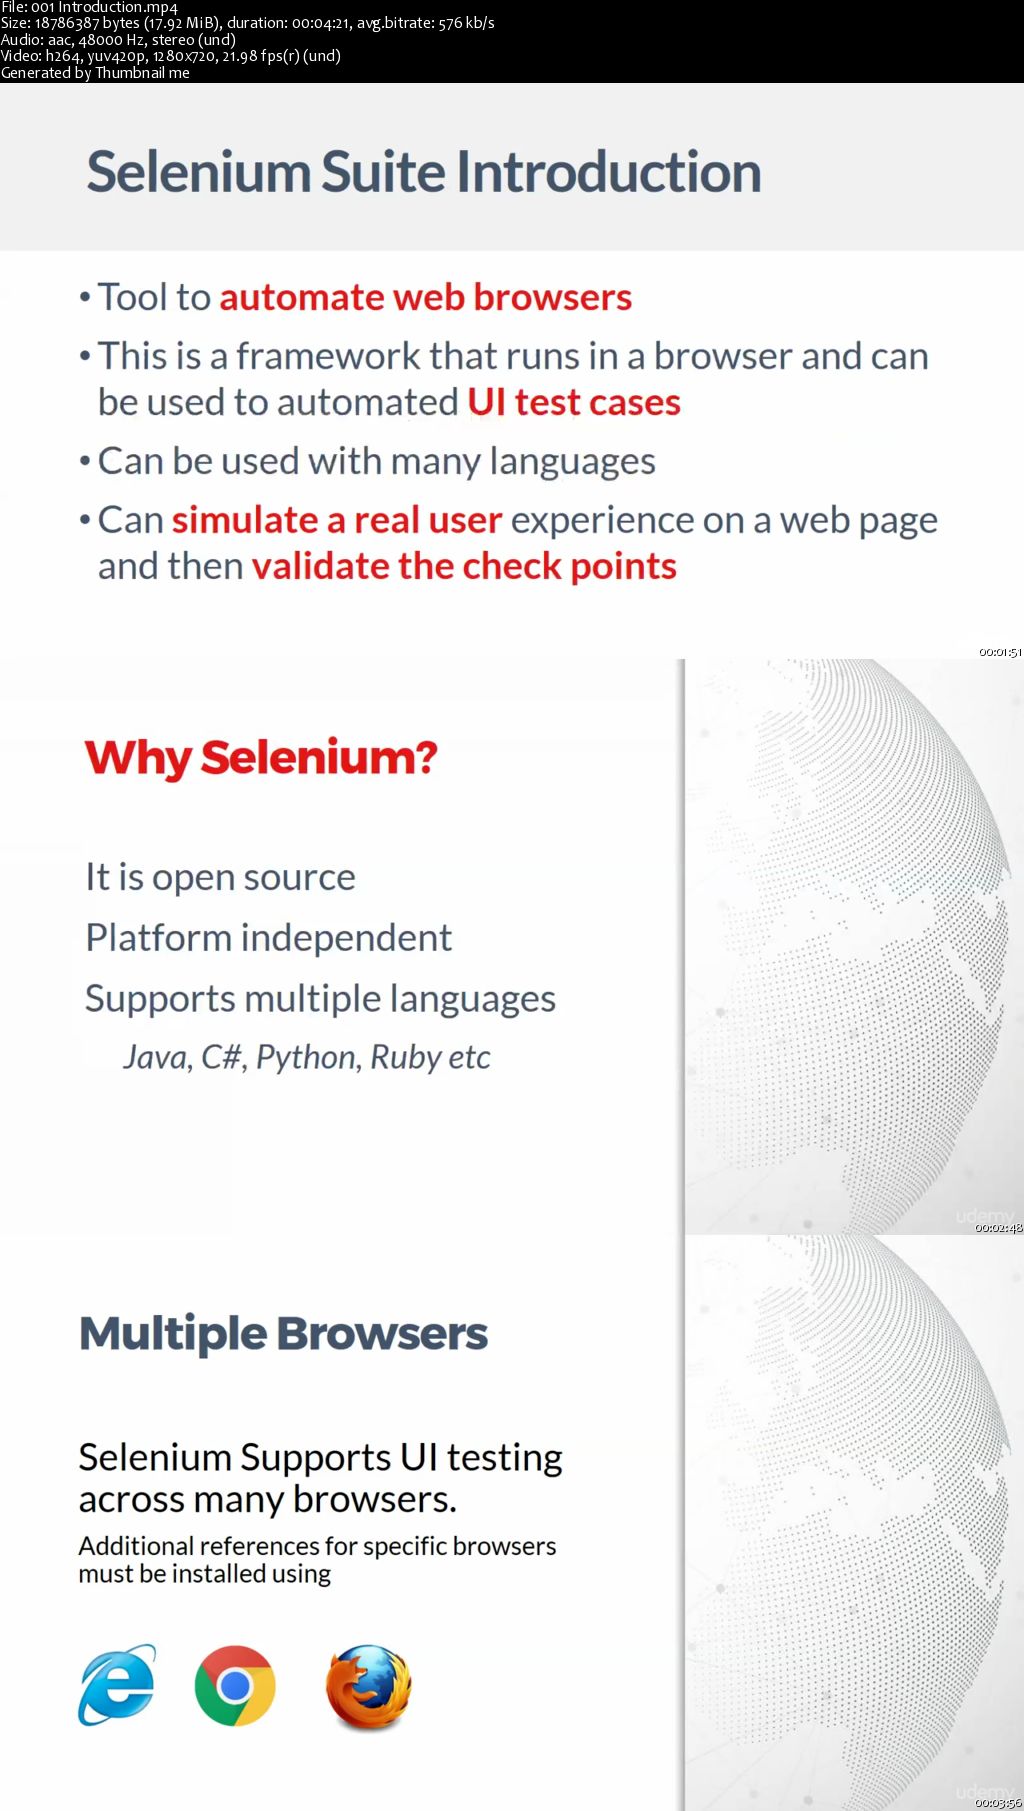 Selenium WebDriver with Java & Cucumber BDD